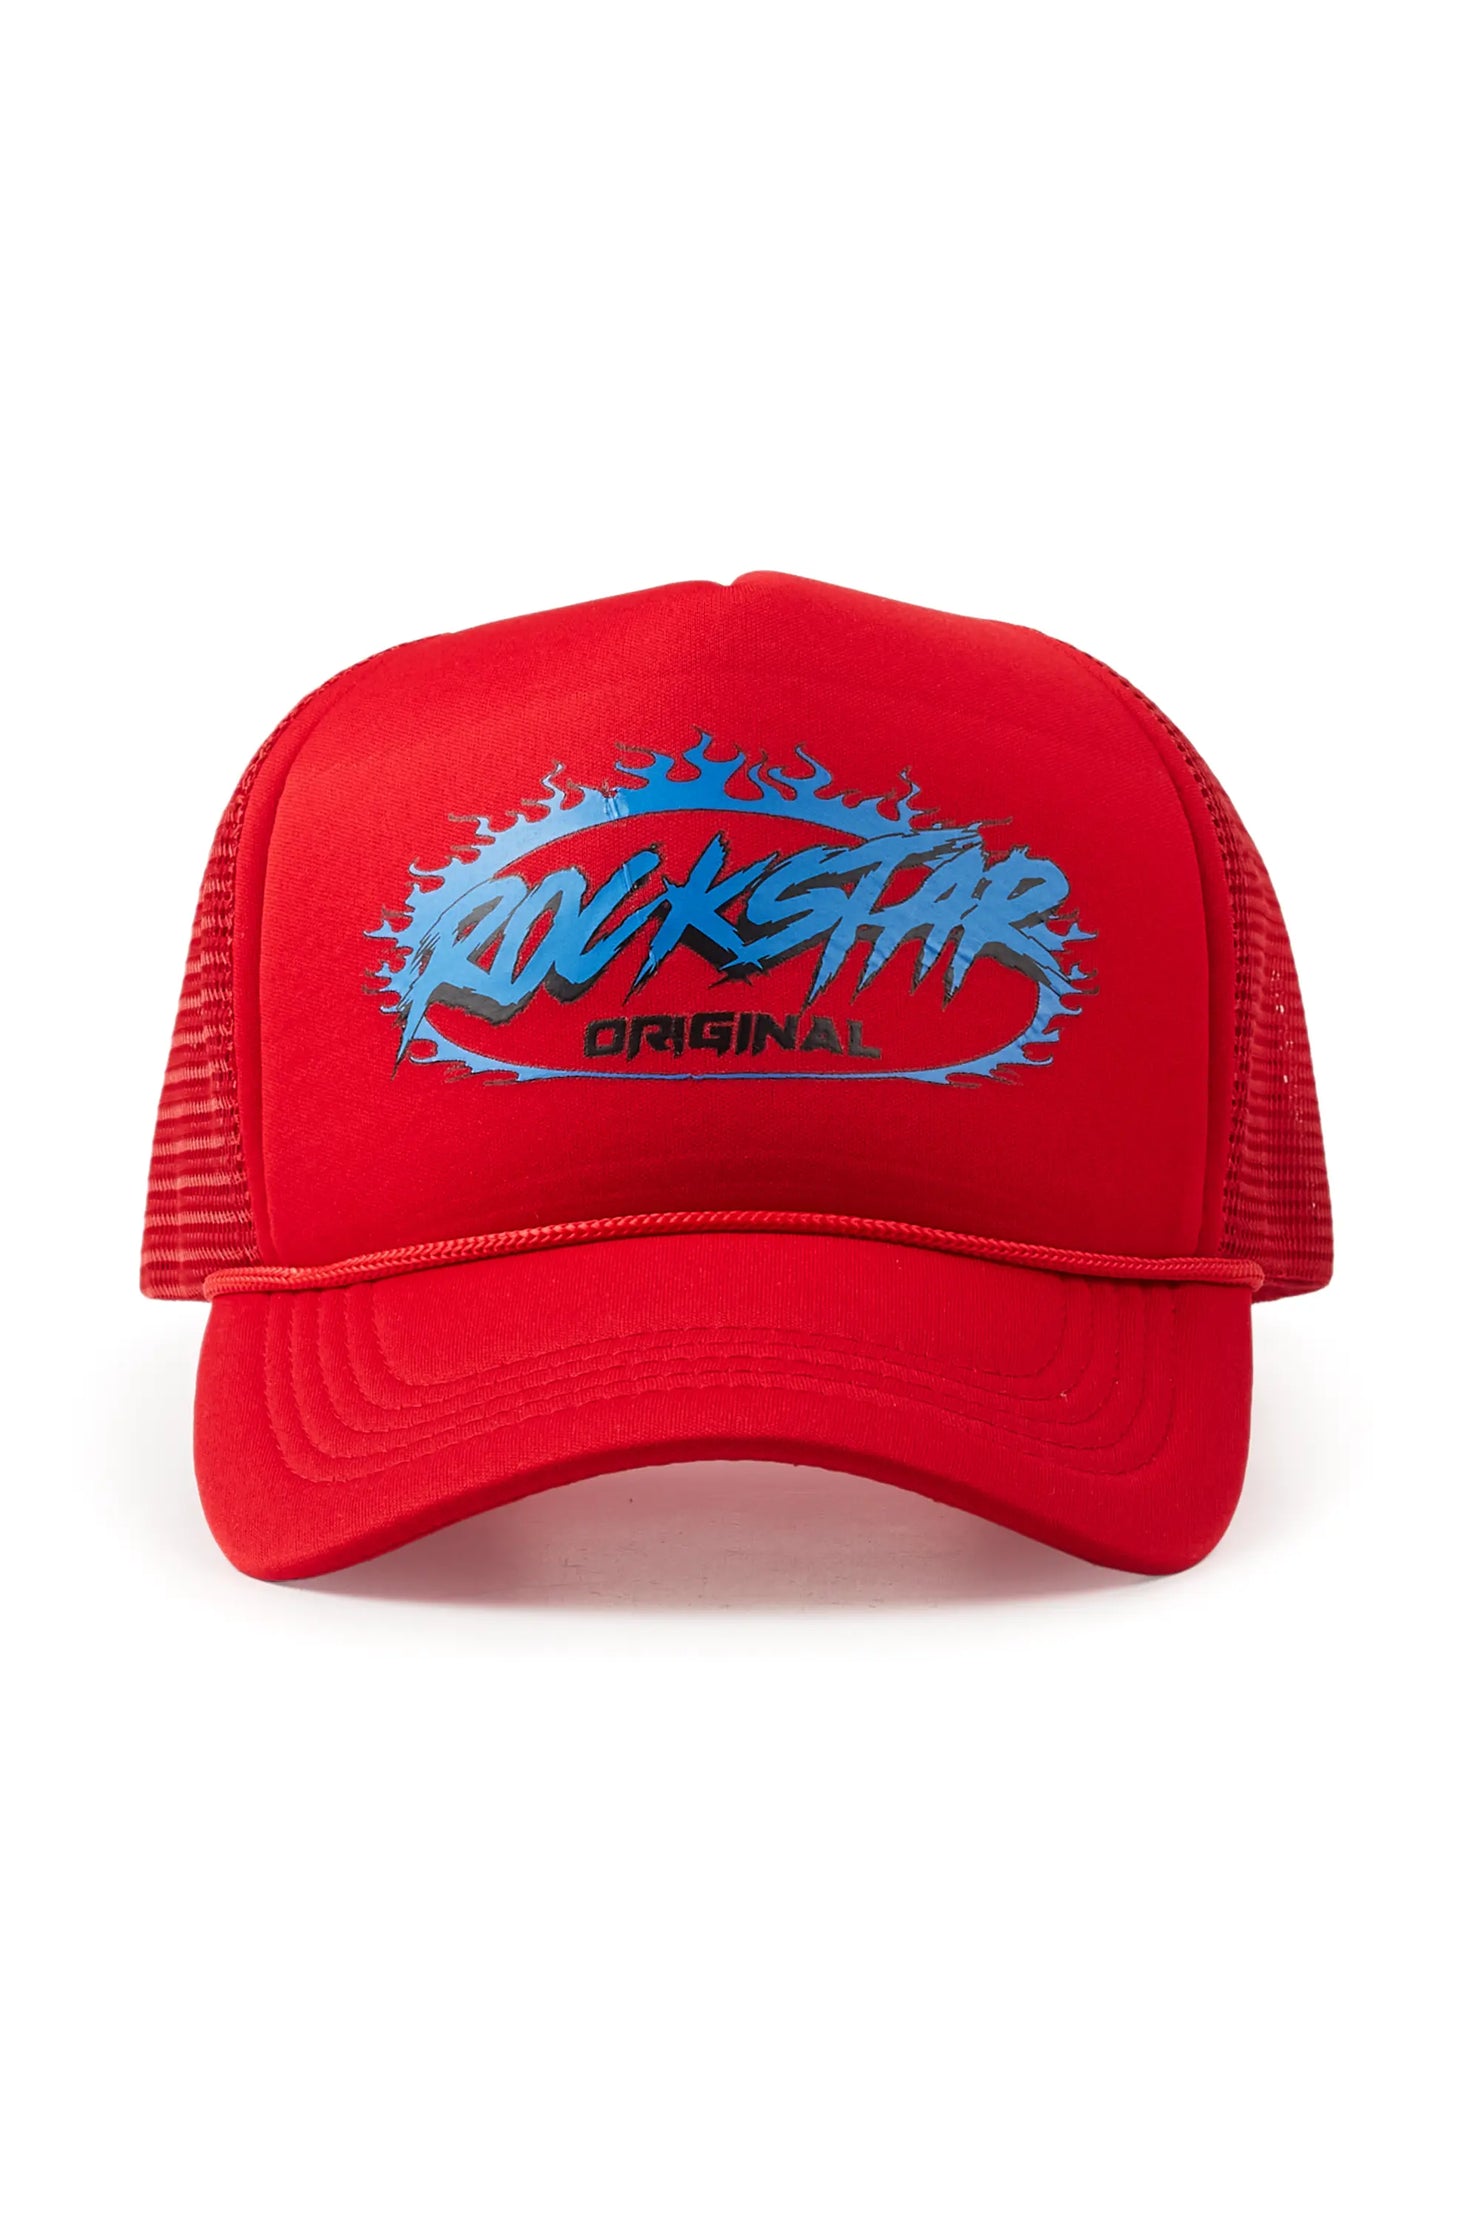 Kemp Red Graphic Trucker Hat